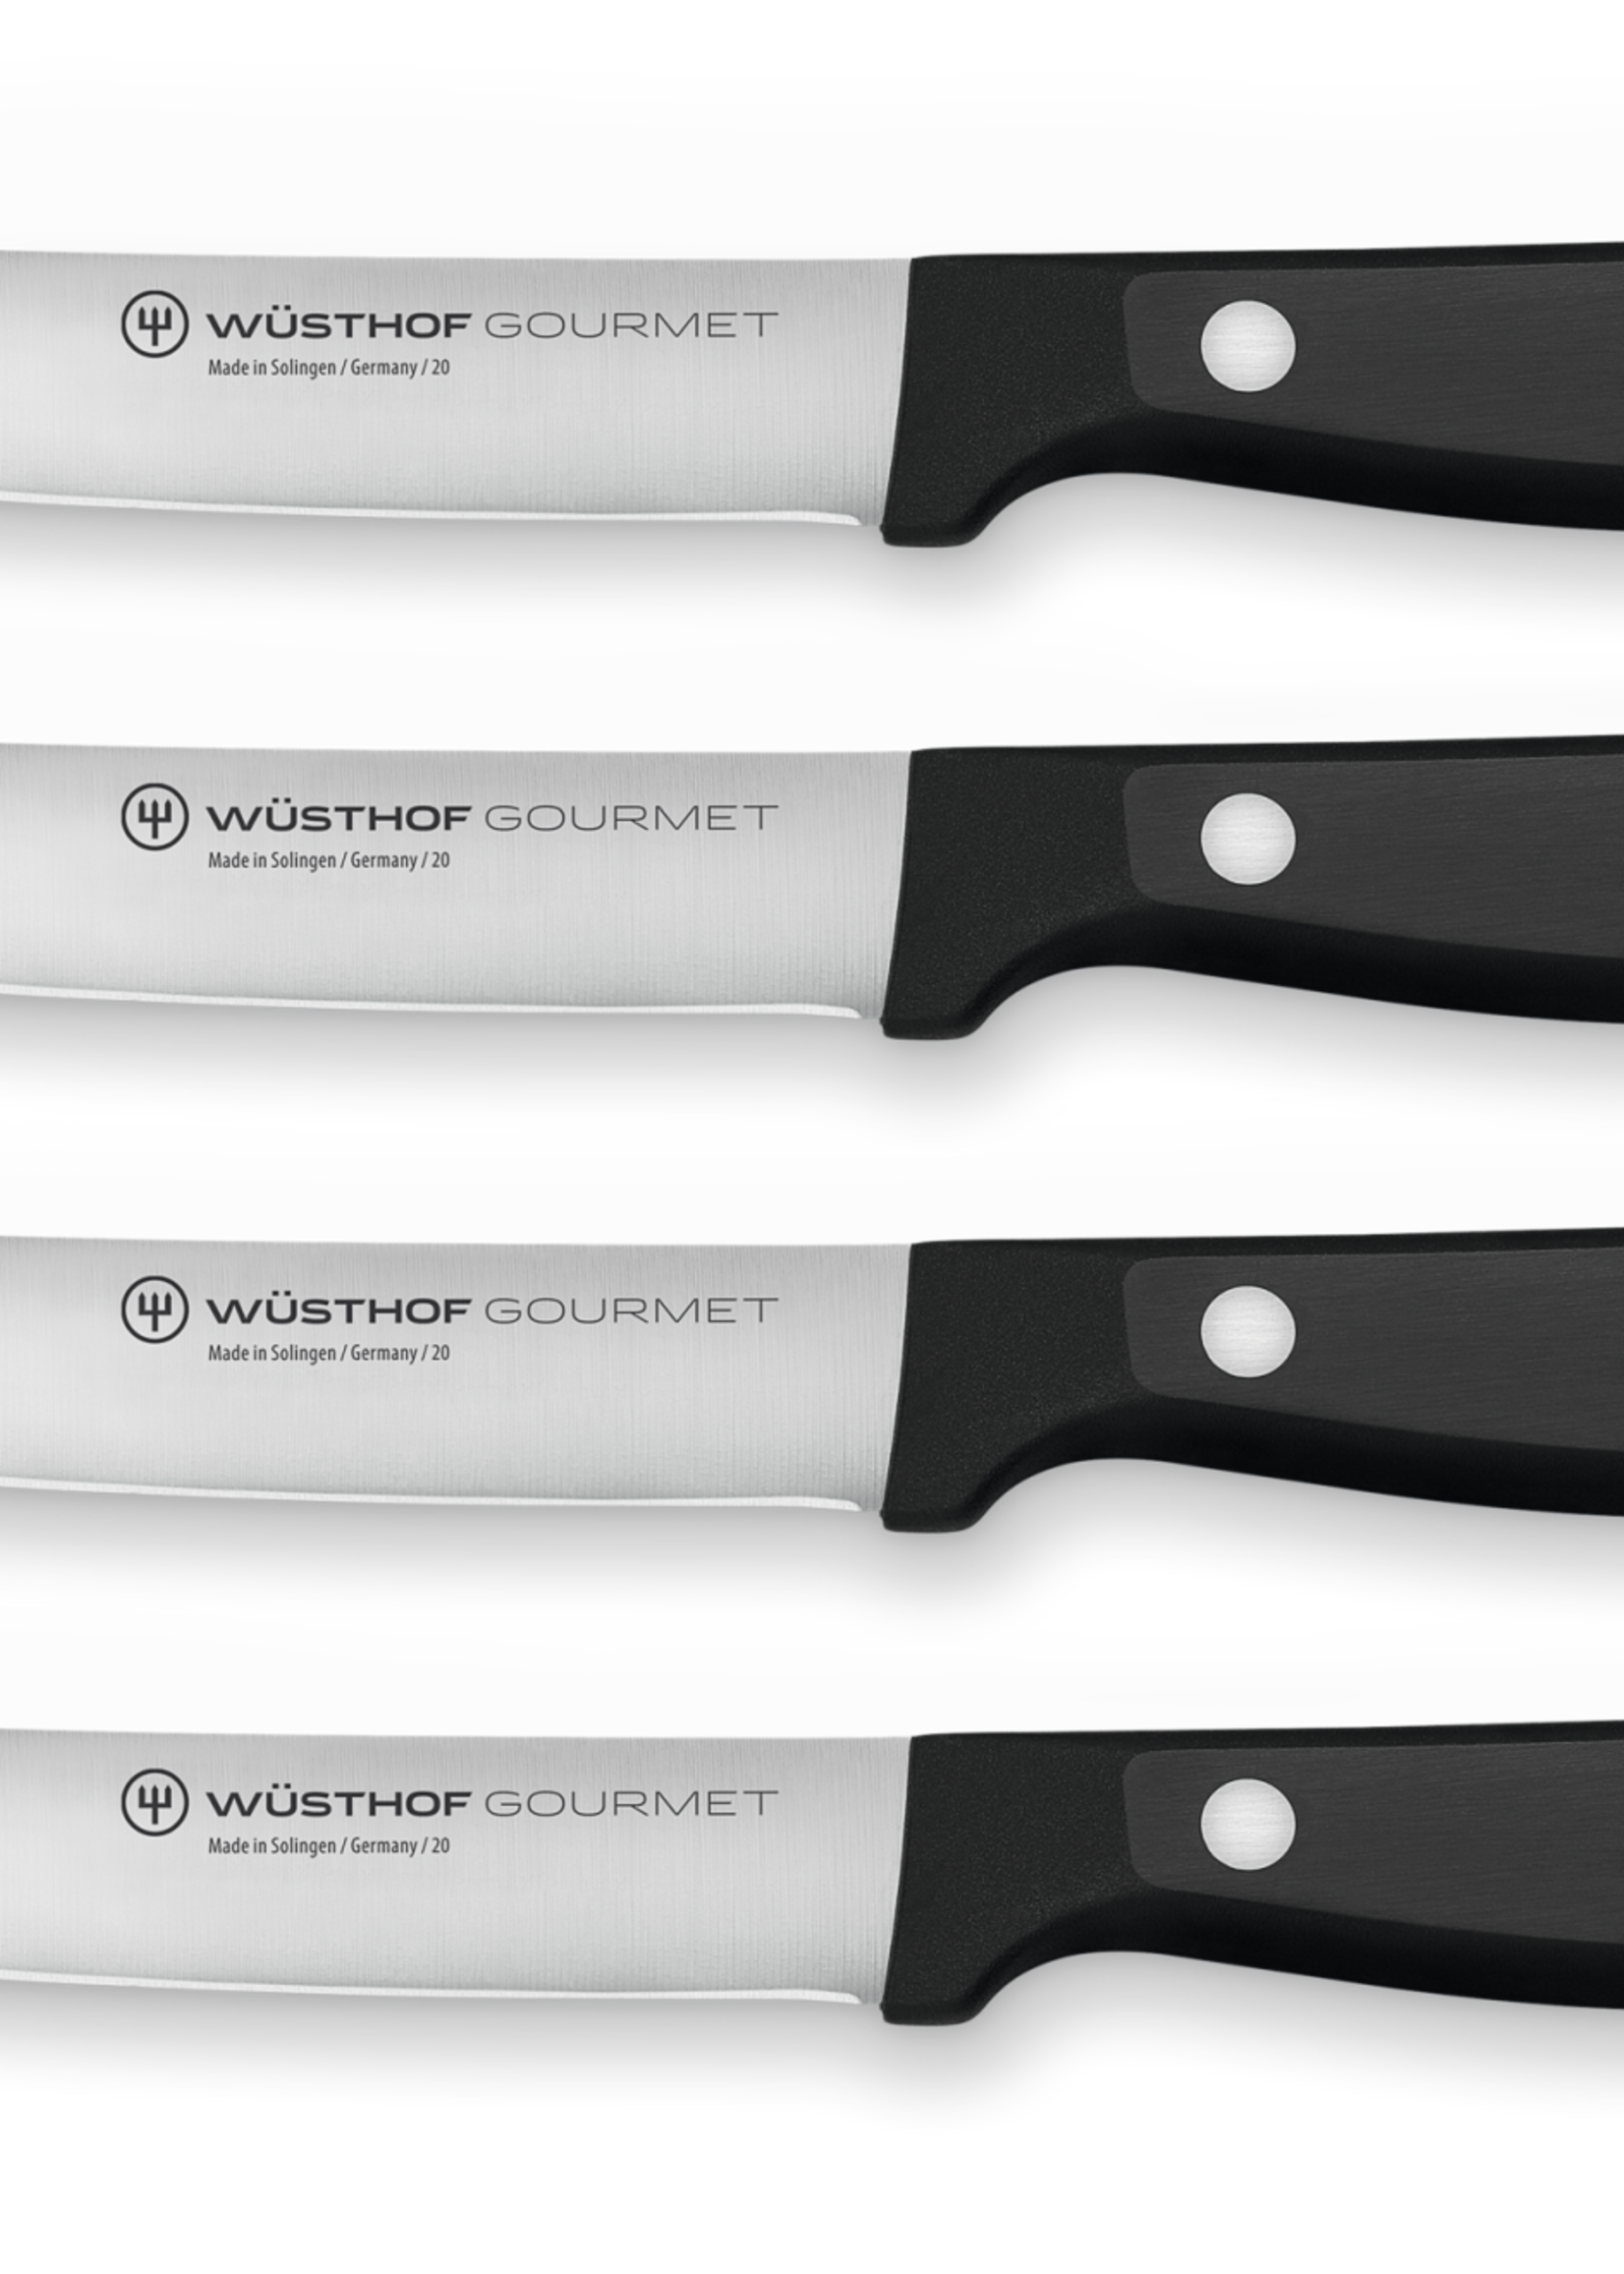 Wusthof Gourmet 4 pc Steak Knife Set